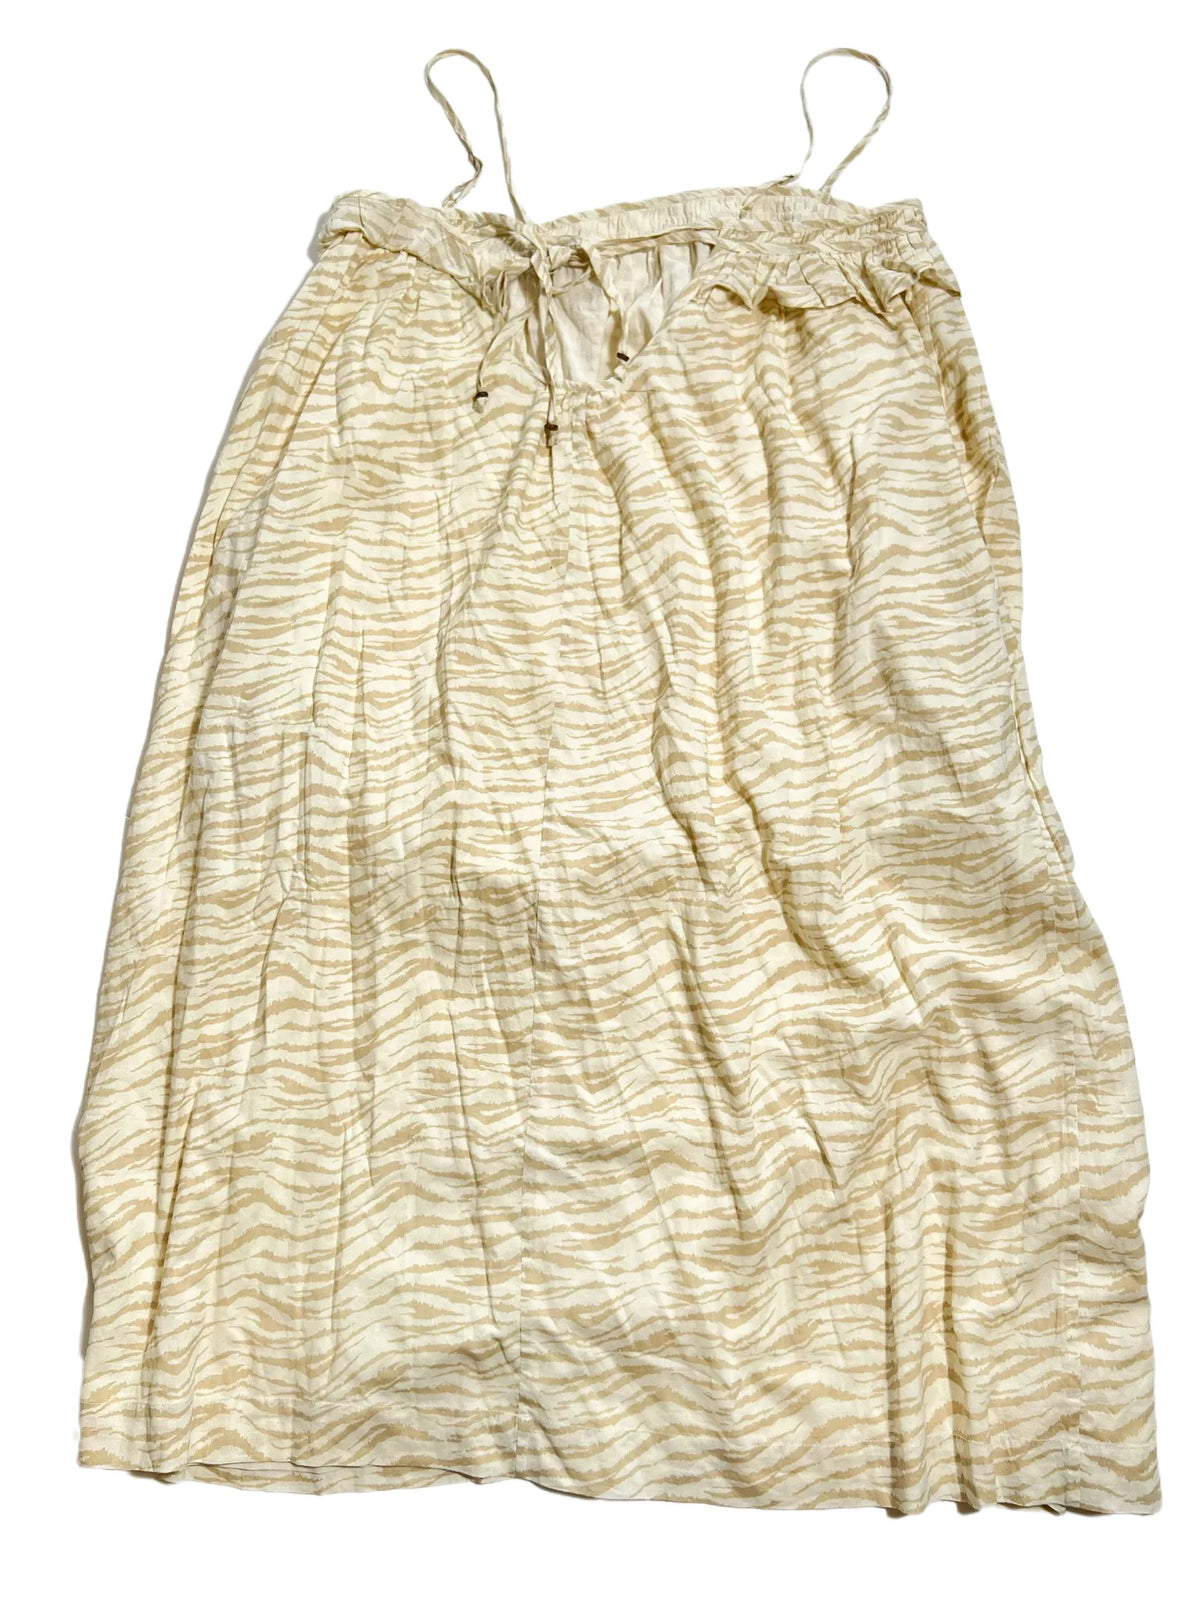 Tularosa- Tan Printed Sleeveless Maxi Dress - NEW WITH TAGS